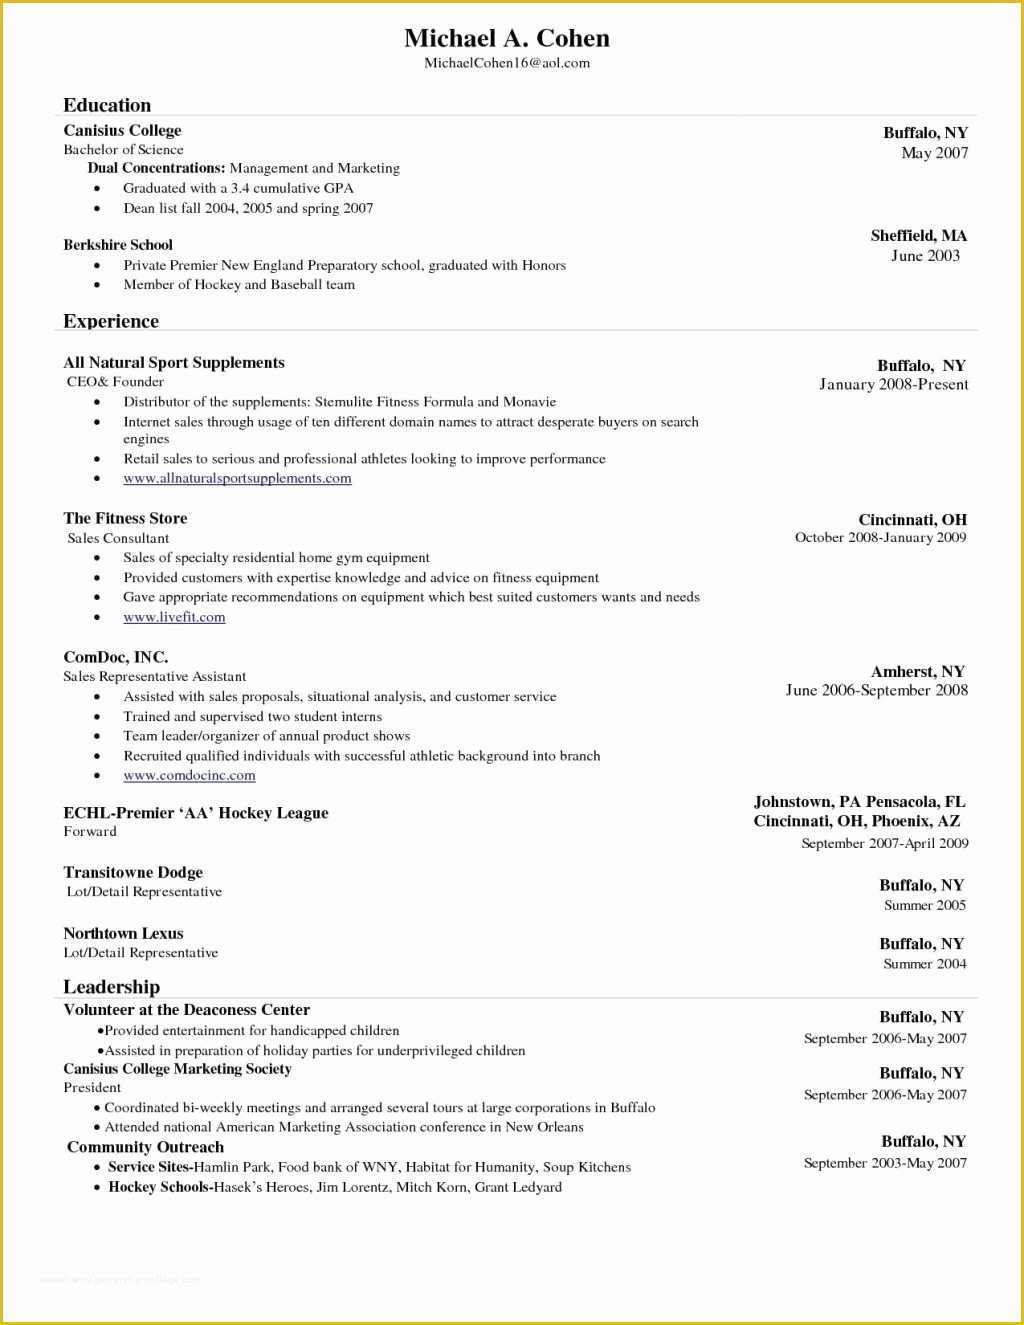 Free Creative Resume Templates Pdf Of Resume and Template Outstanding Free Creative Resume